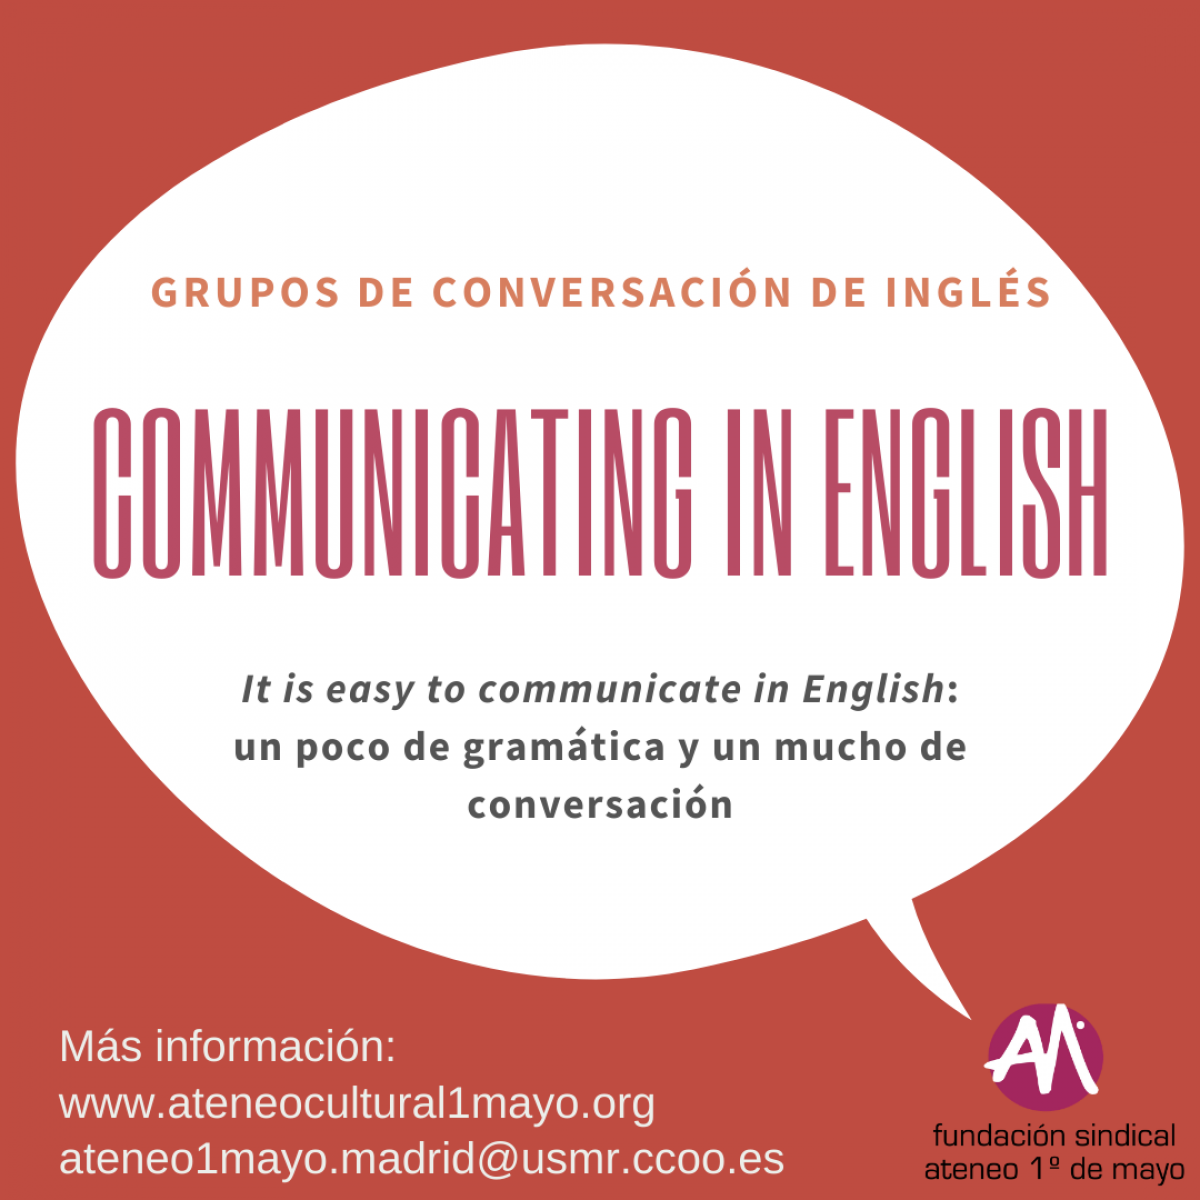 Communicating in English